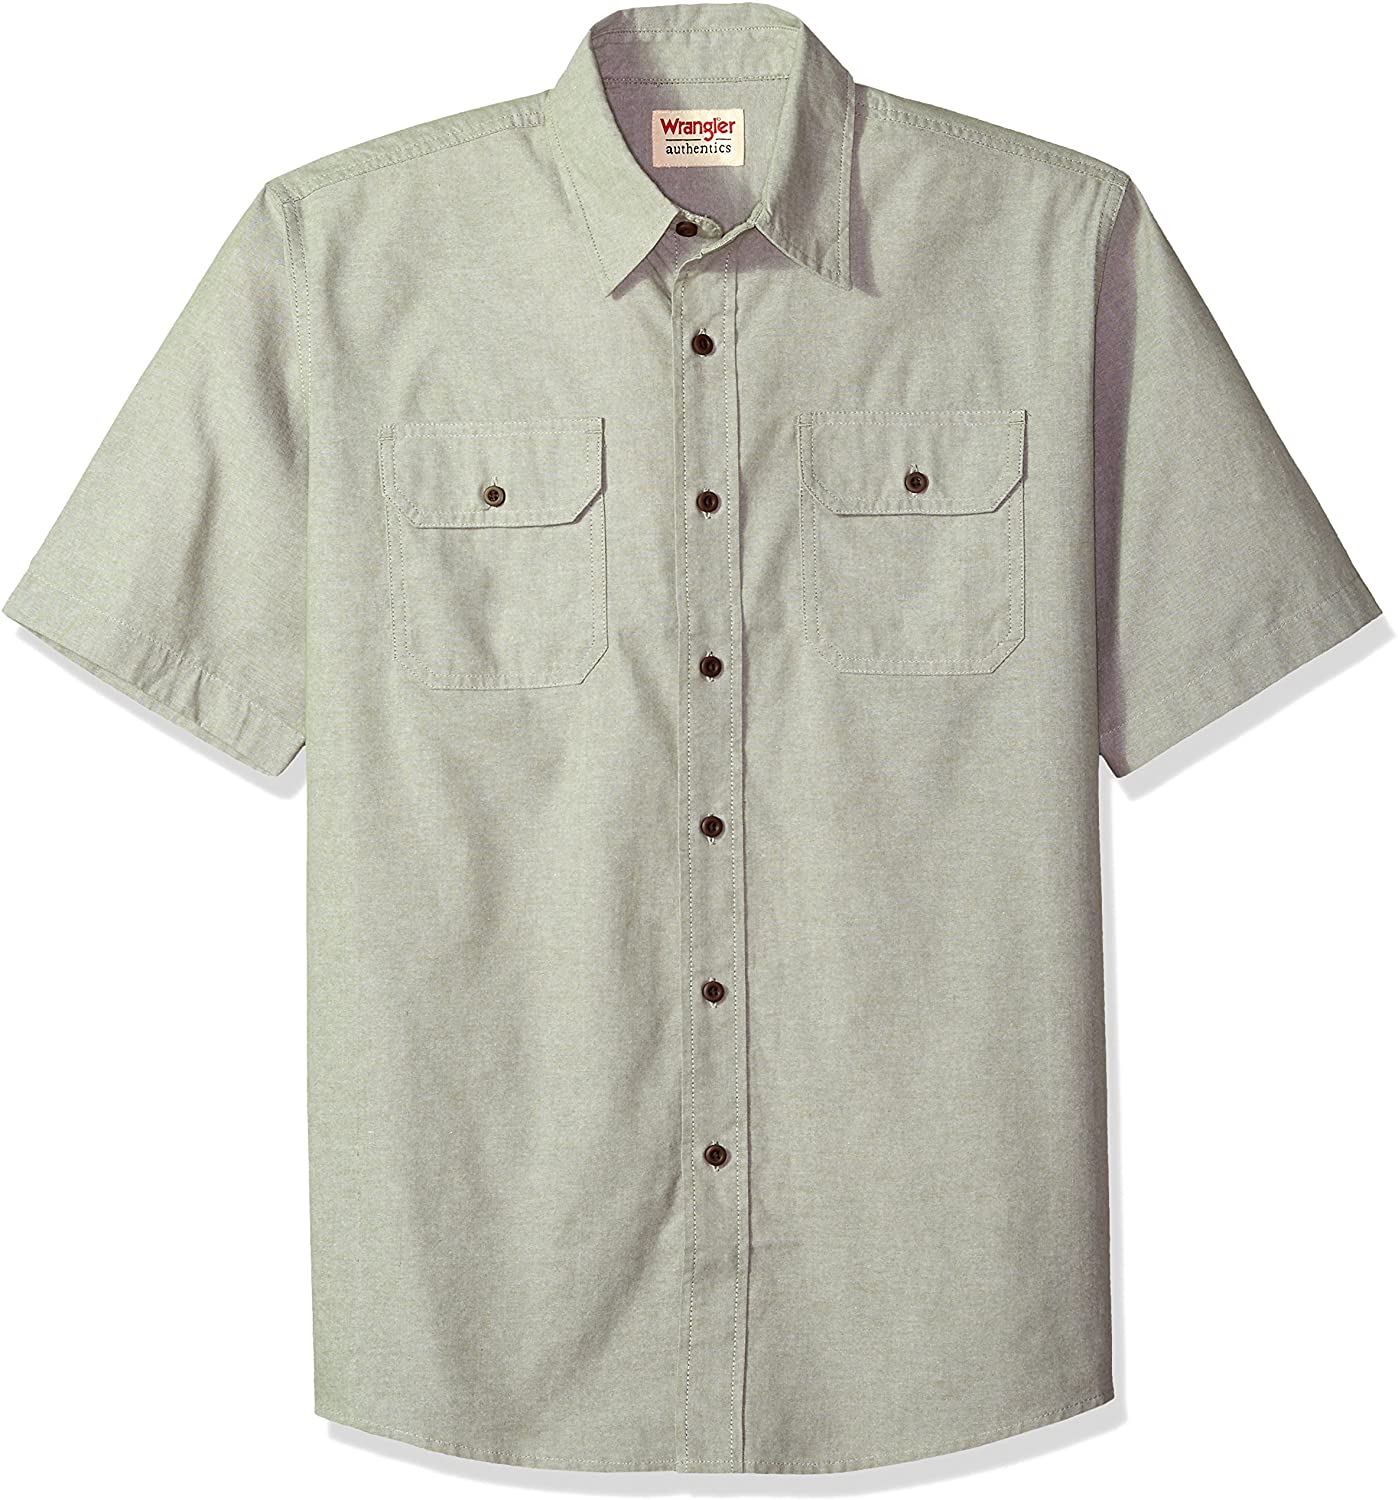 Wrangler Authentics Men's Short Sleeve Classic Woven Shirt 